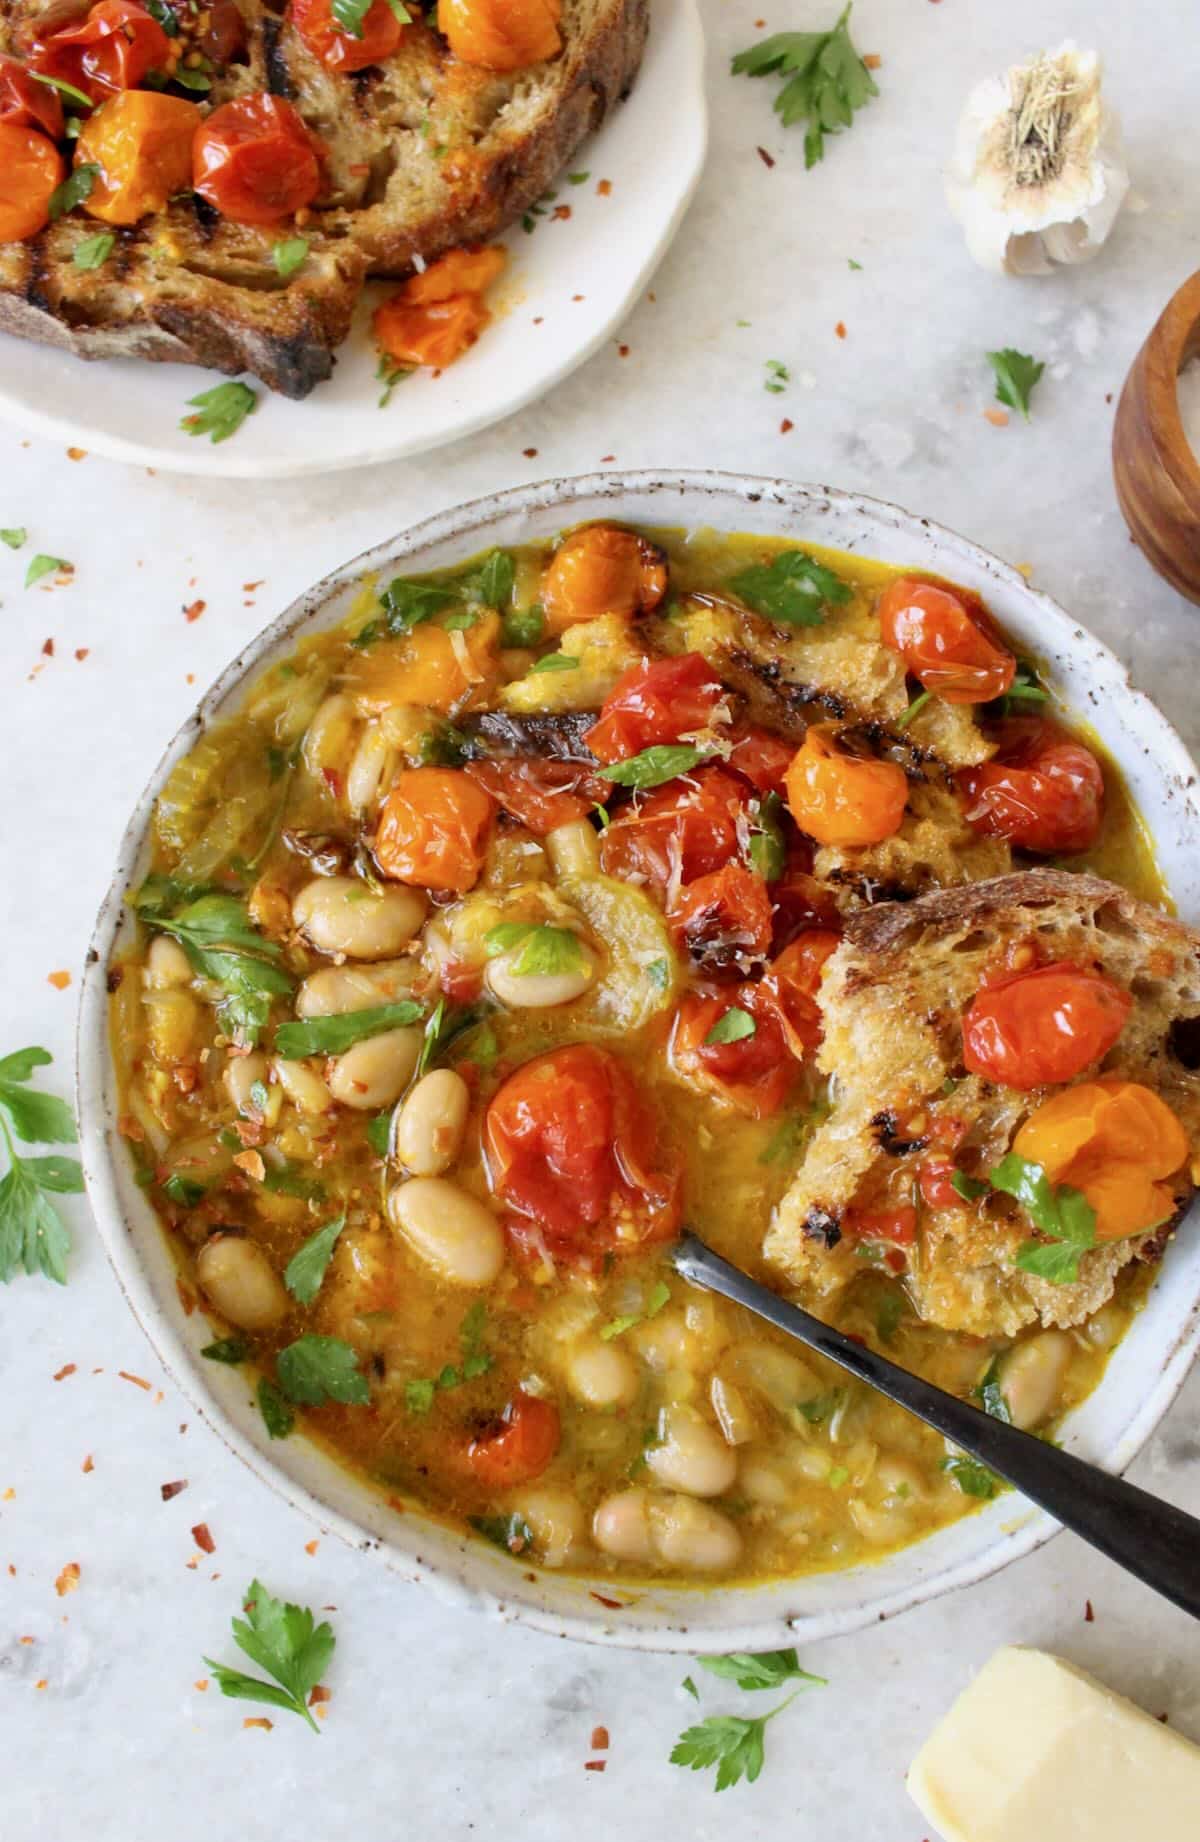 Vegan White Bean Soup Recipe